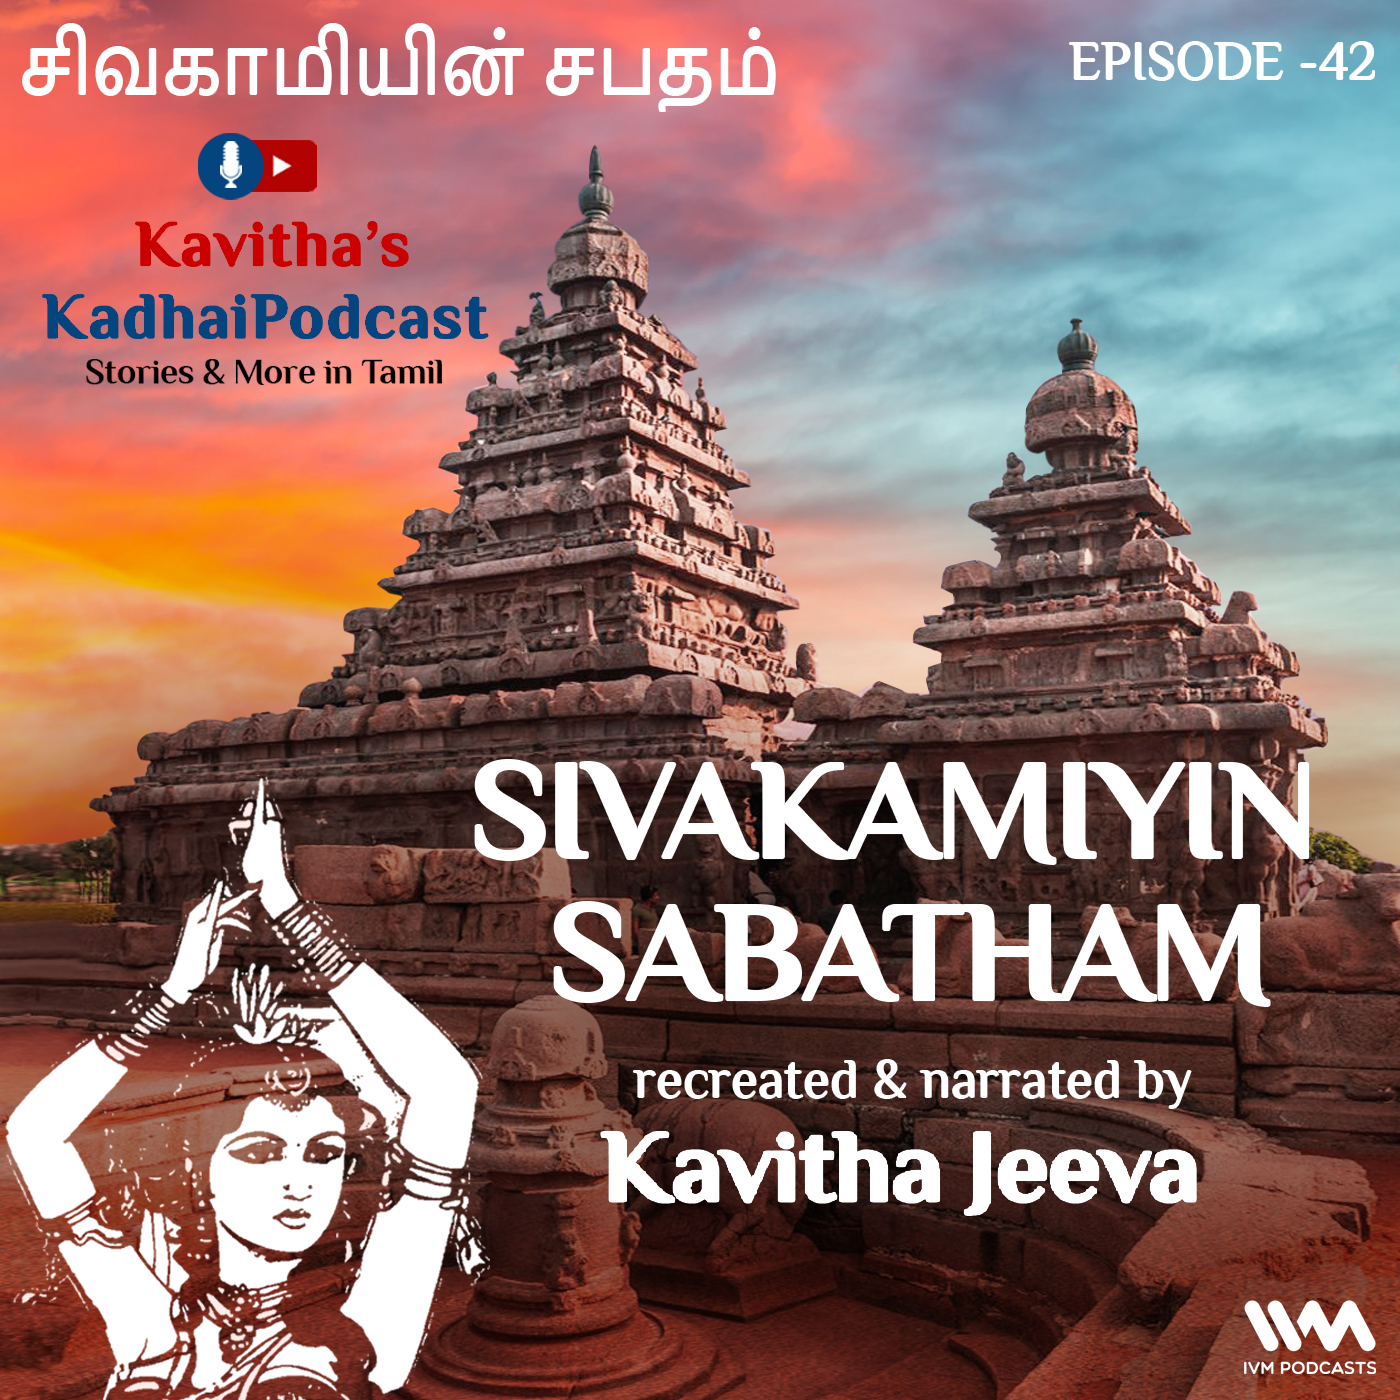 KadhaiPodcast's Sivakamiyin Sabatham - Episode # 42